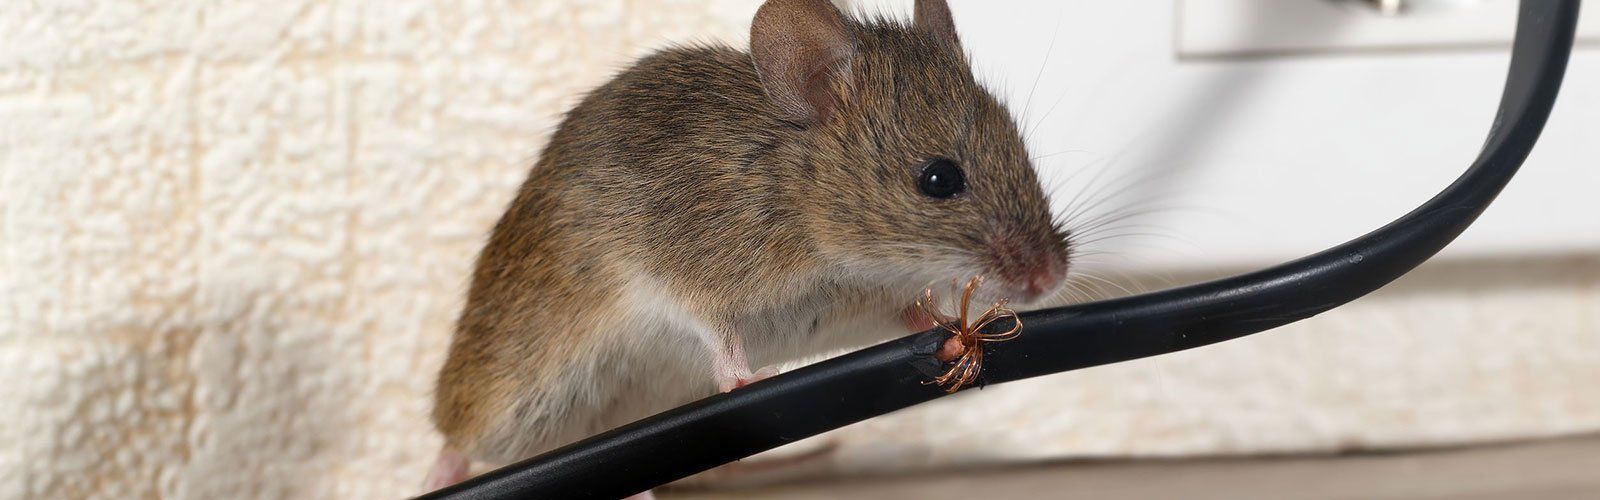 Rat — Important Information Pest Control in Tablelands, QLD